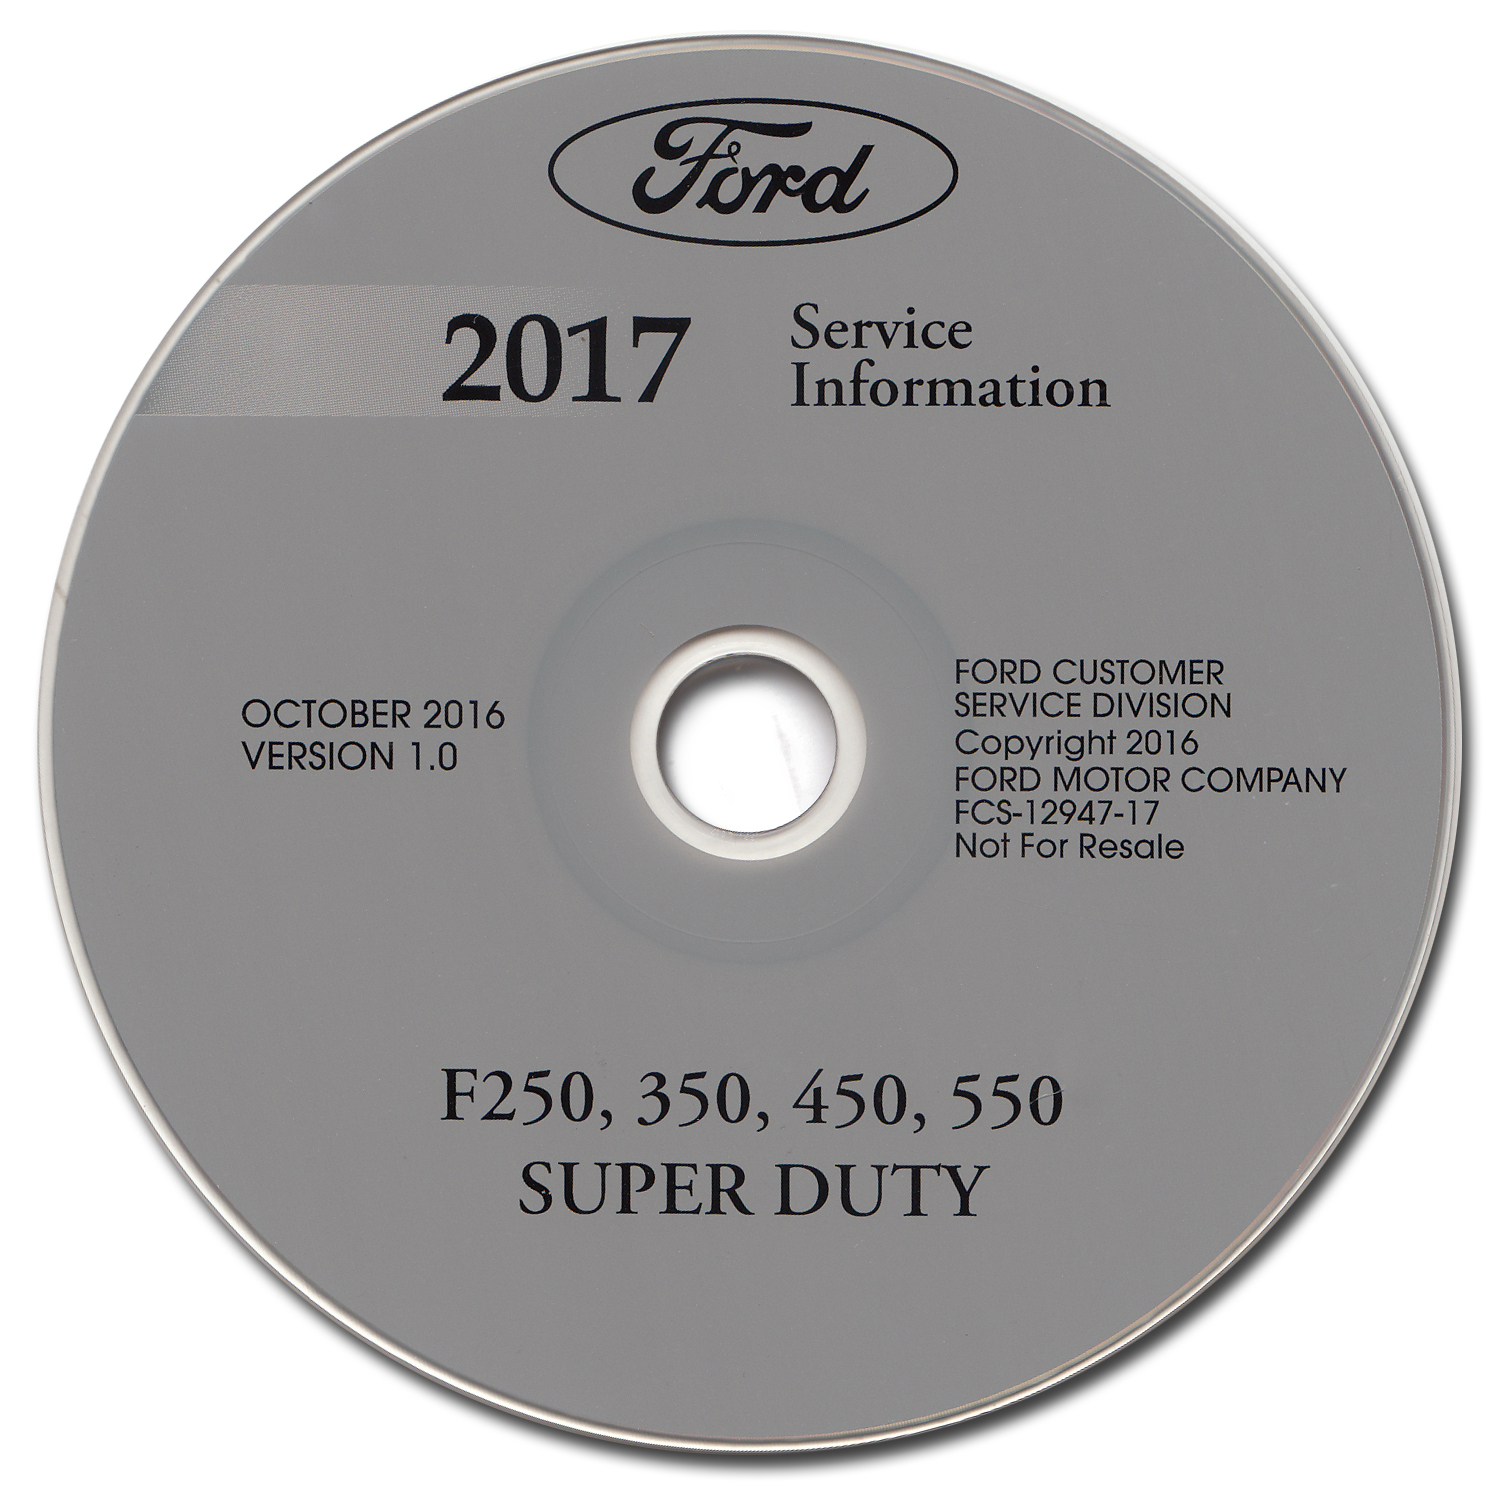 2017 Ford F250-F550 Super Duty Repair Shop Manual on CD-ROM Original